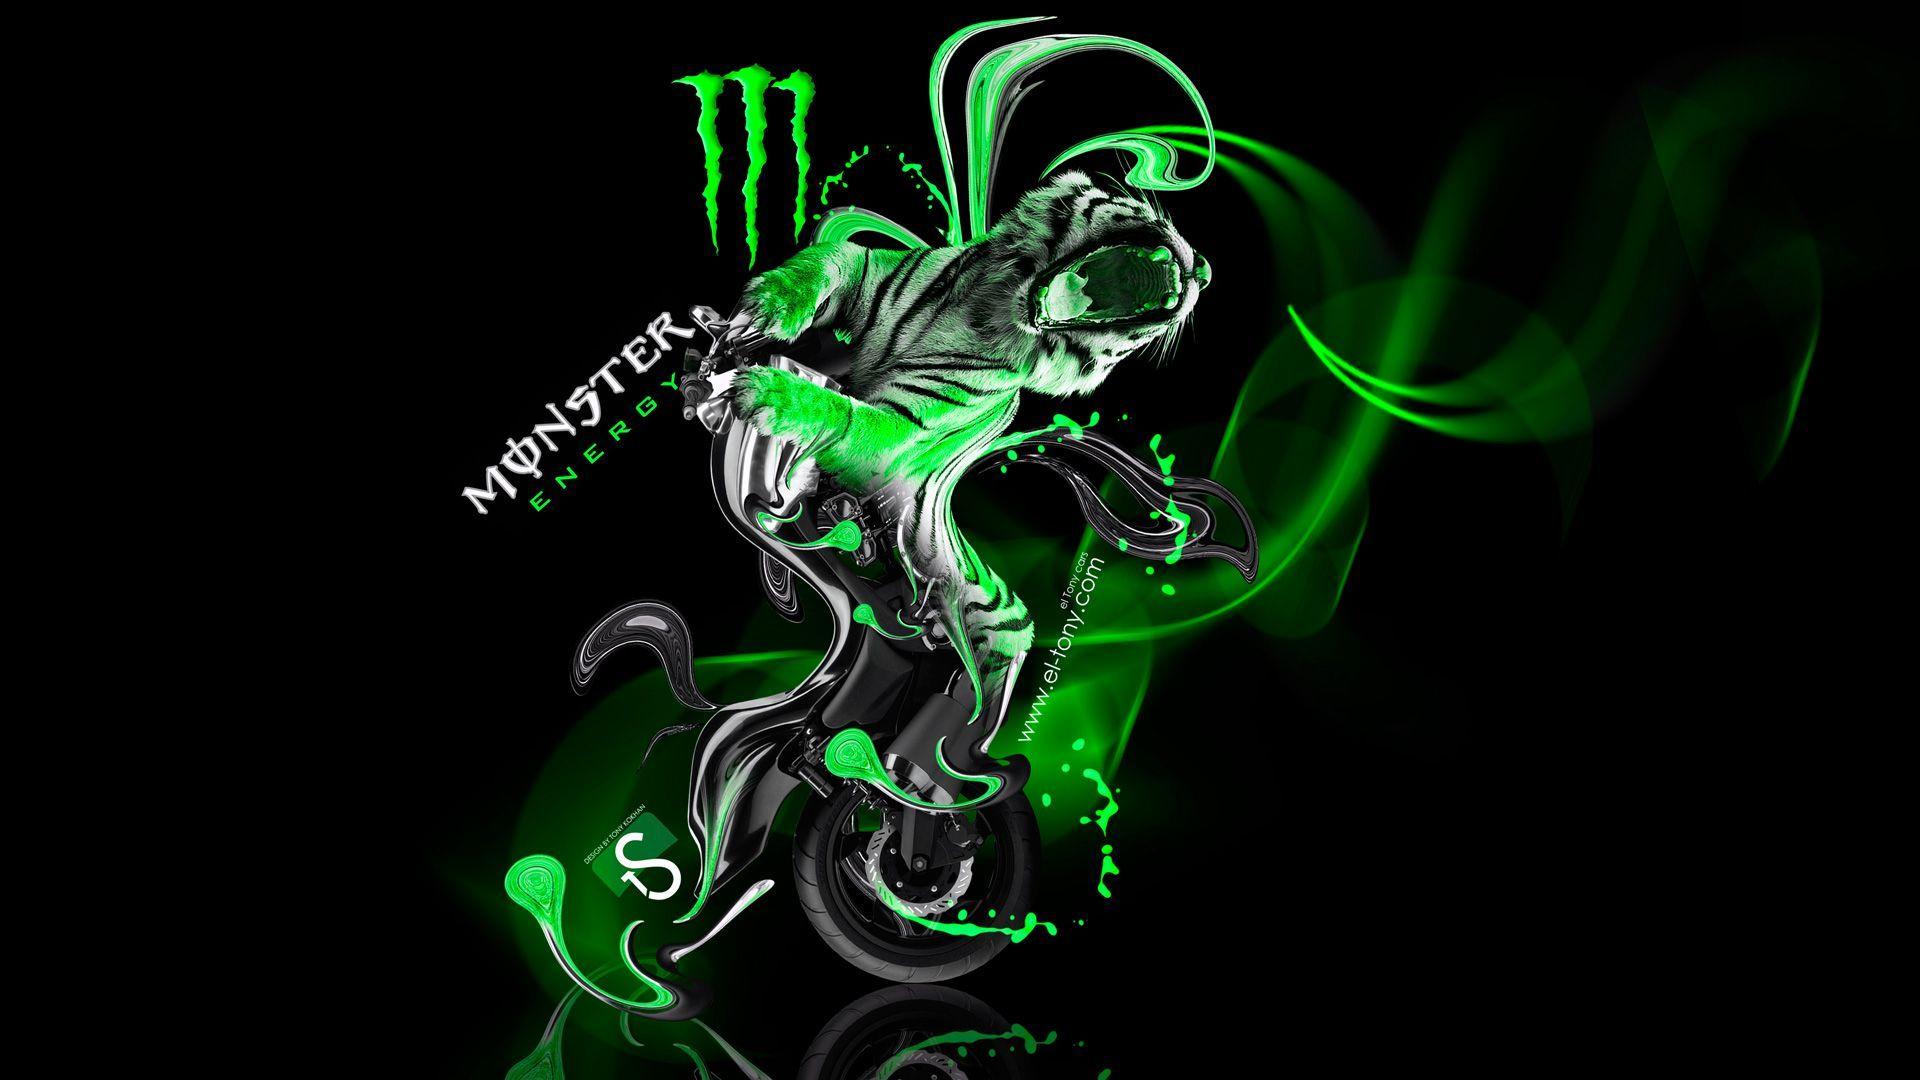 Monster Energy Wallpaper Free Download